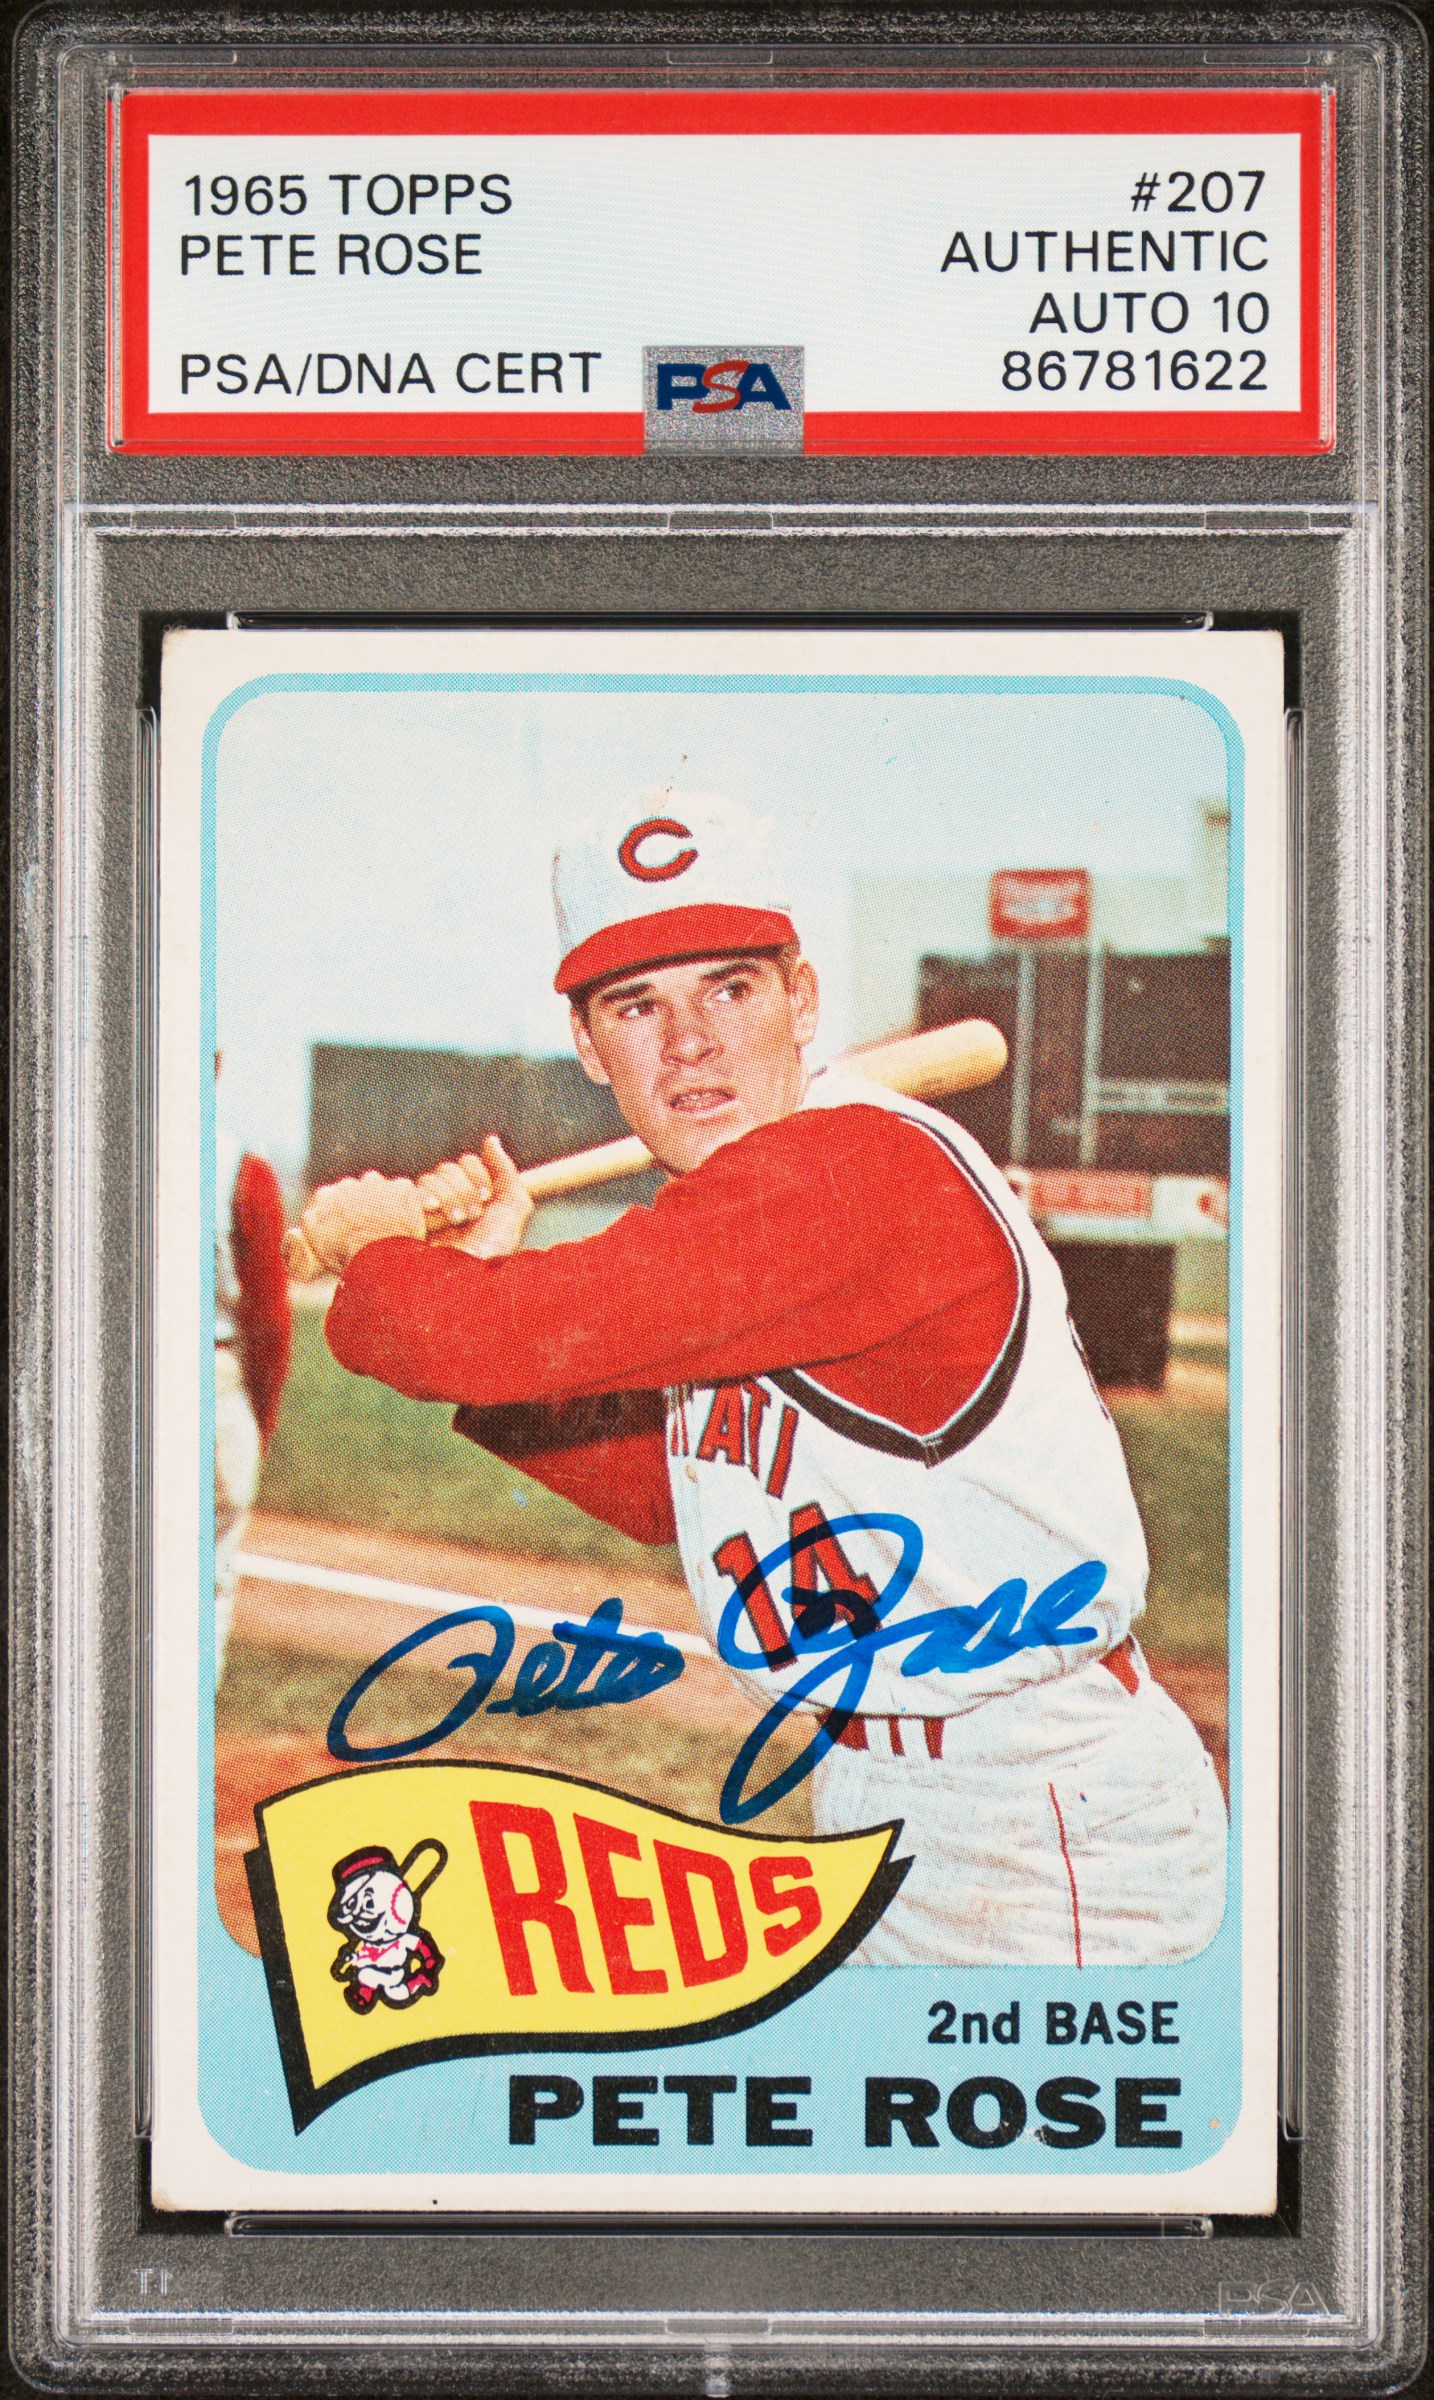 Pete Rose 1965 Topps Signed Baseball Card #207 Auto Graded PSA 10 86781622